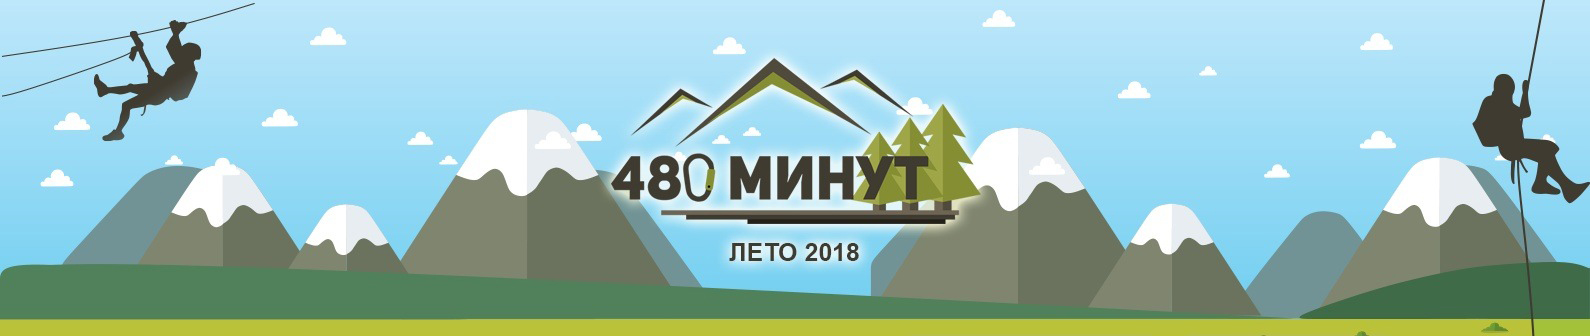 Логотип: «480 минут»